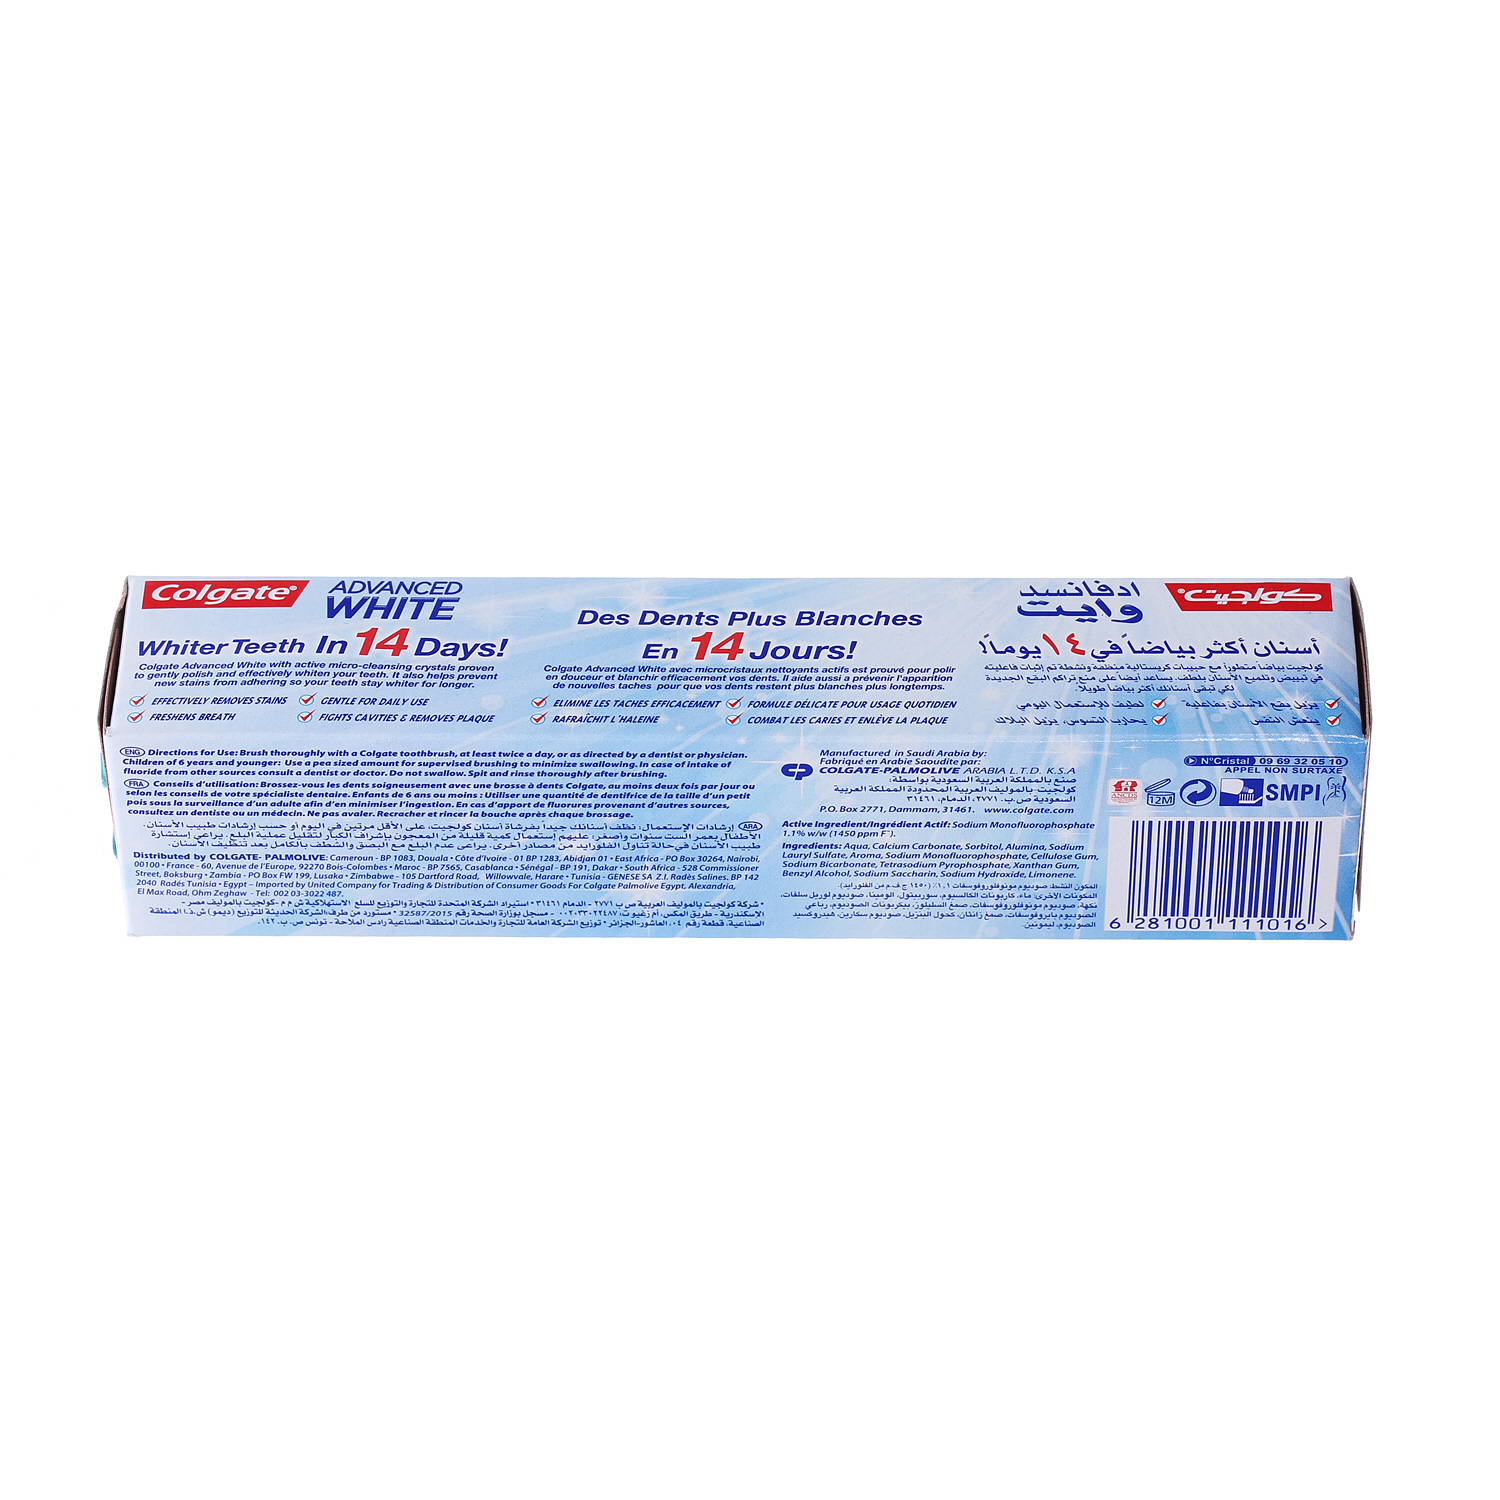 Colgate Toothpaste Advanced Whitening 125ml